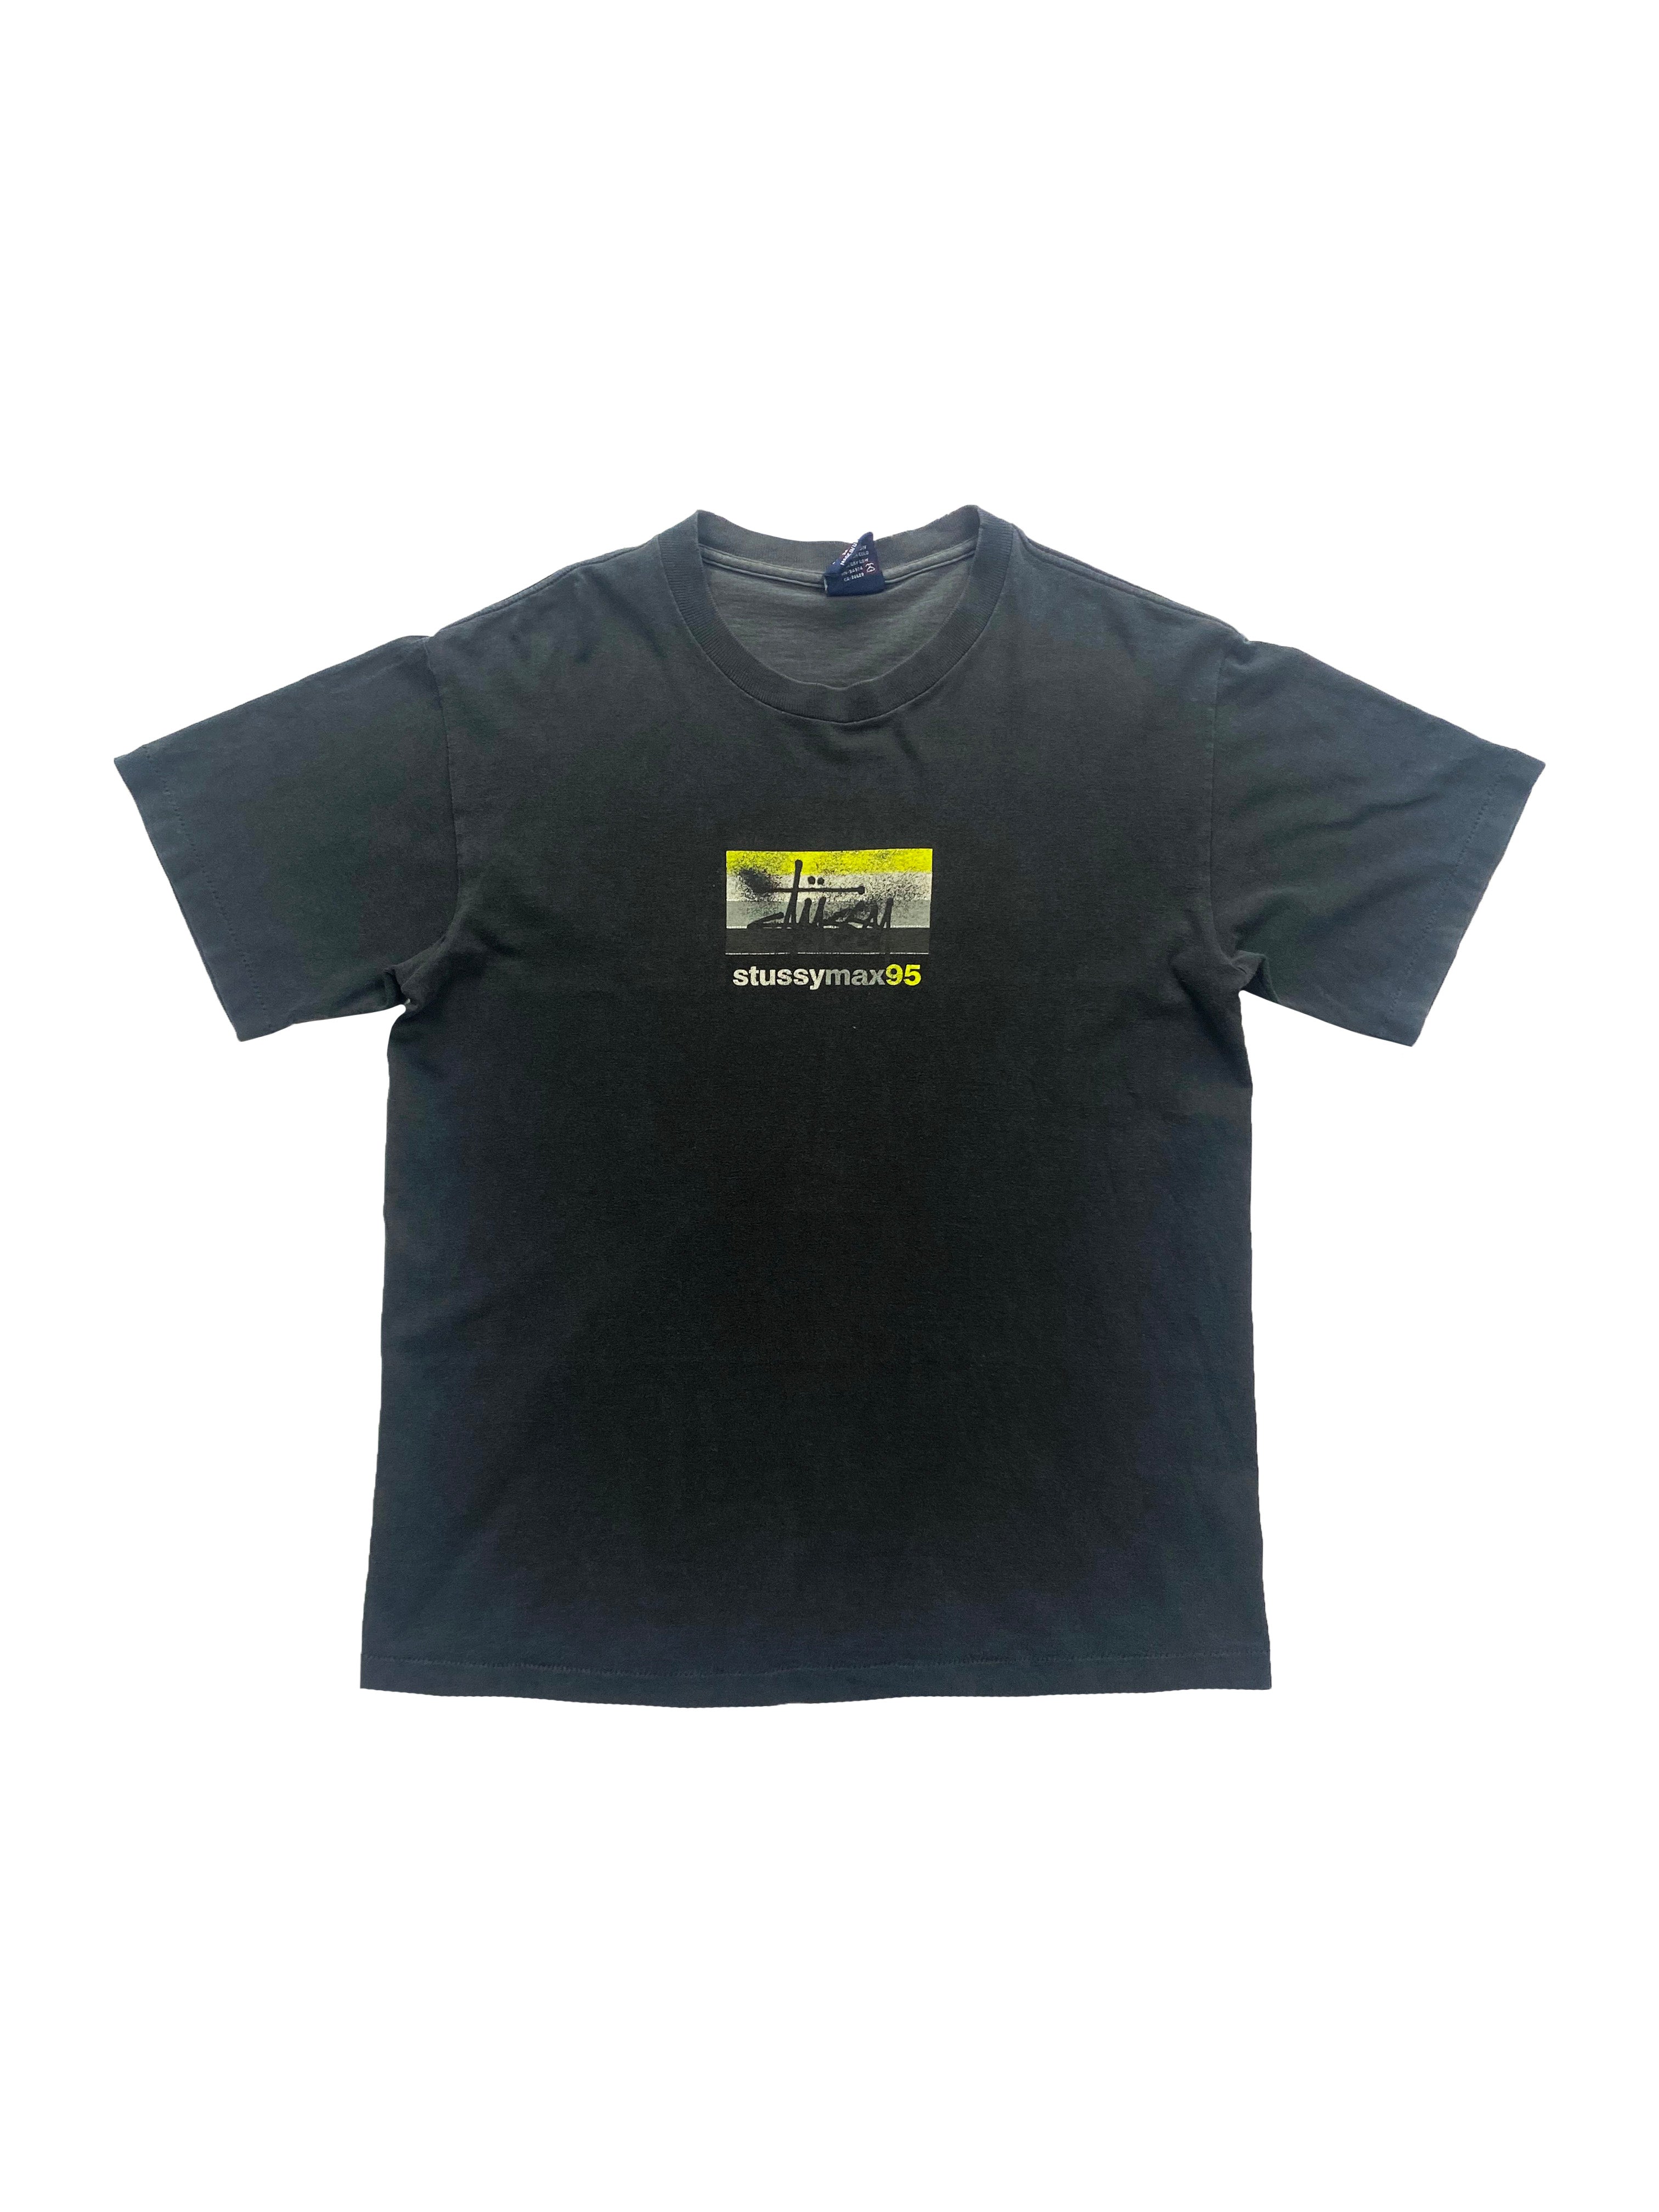 Stussy Black Air Max 95 T-shirt 90's